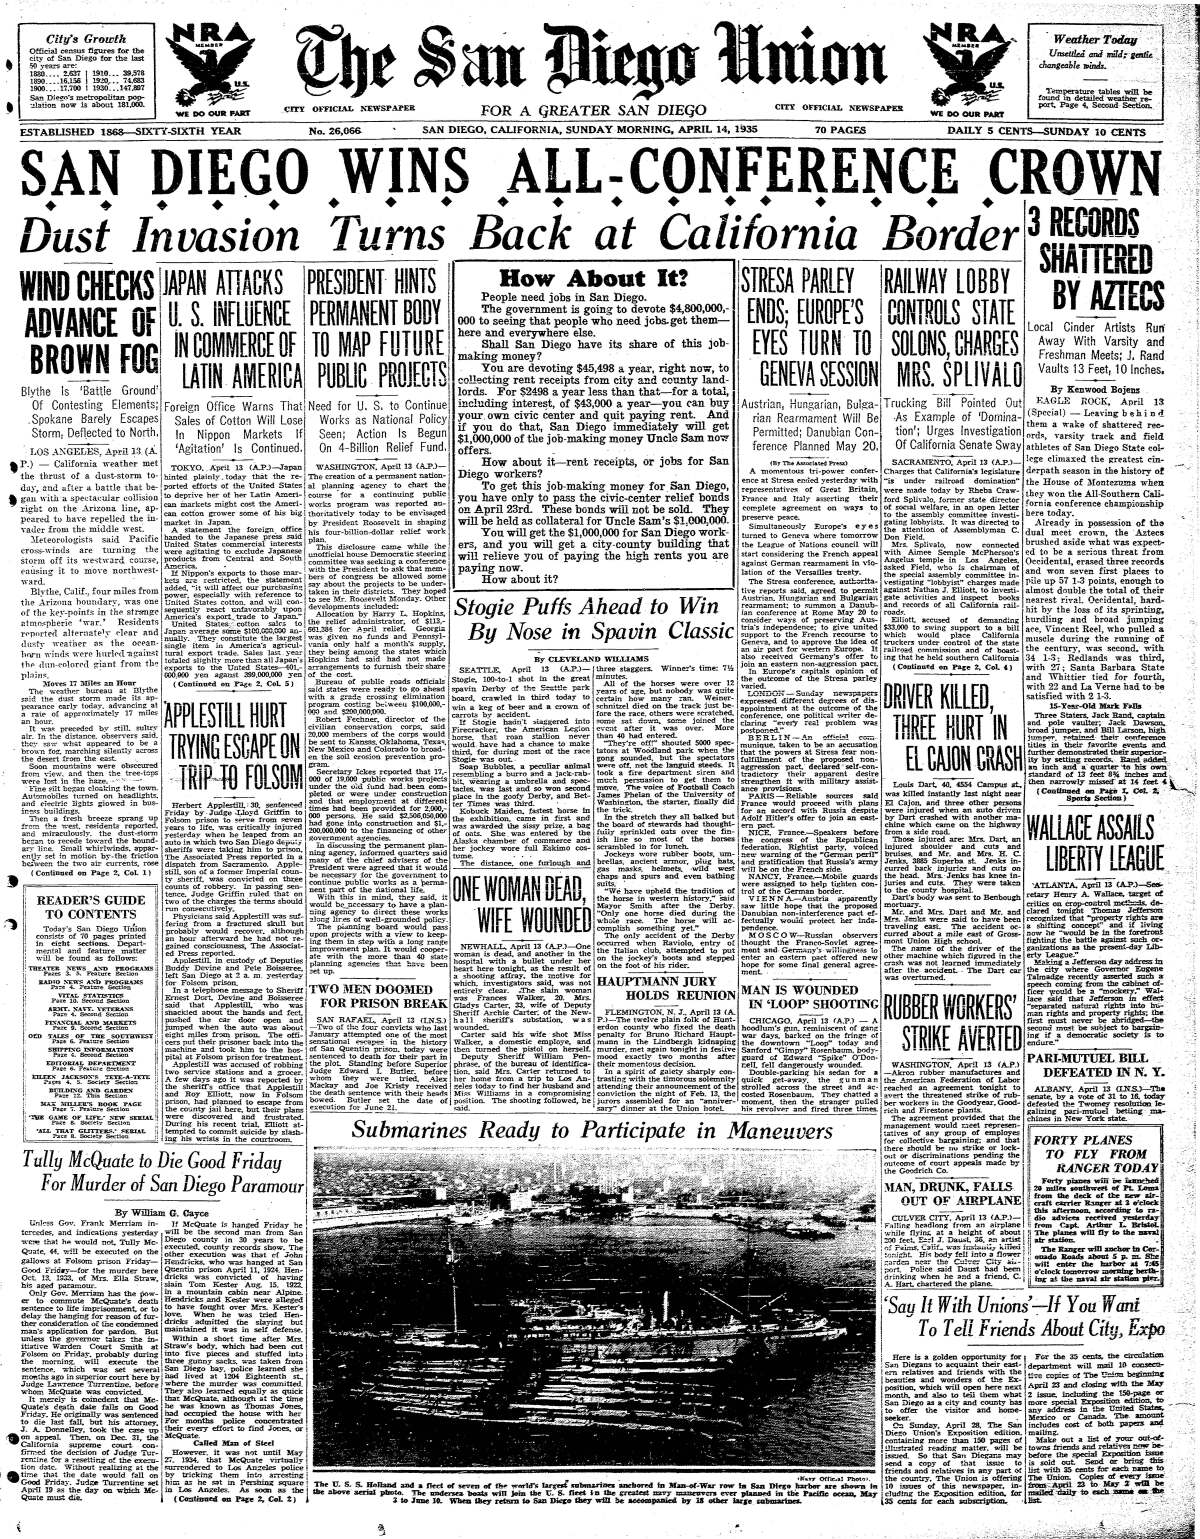 April 14, 1935 front page